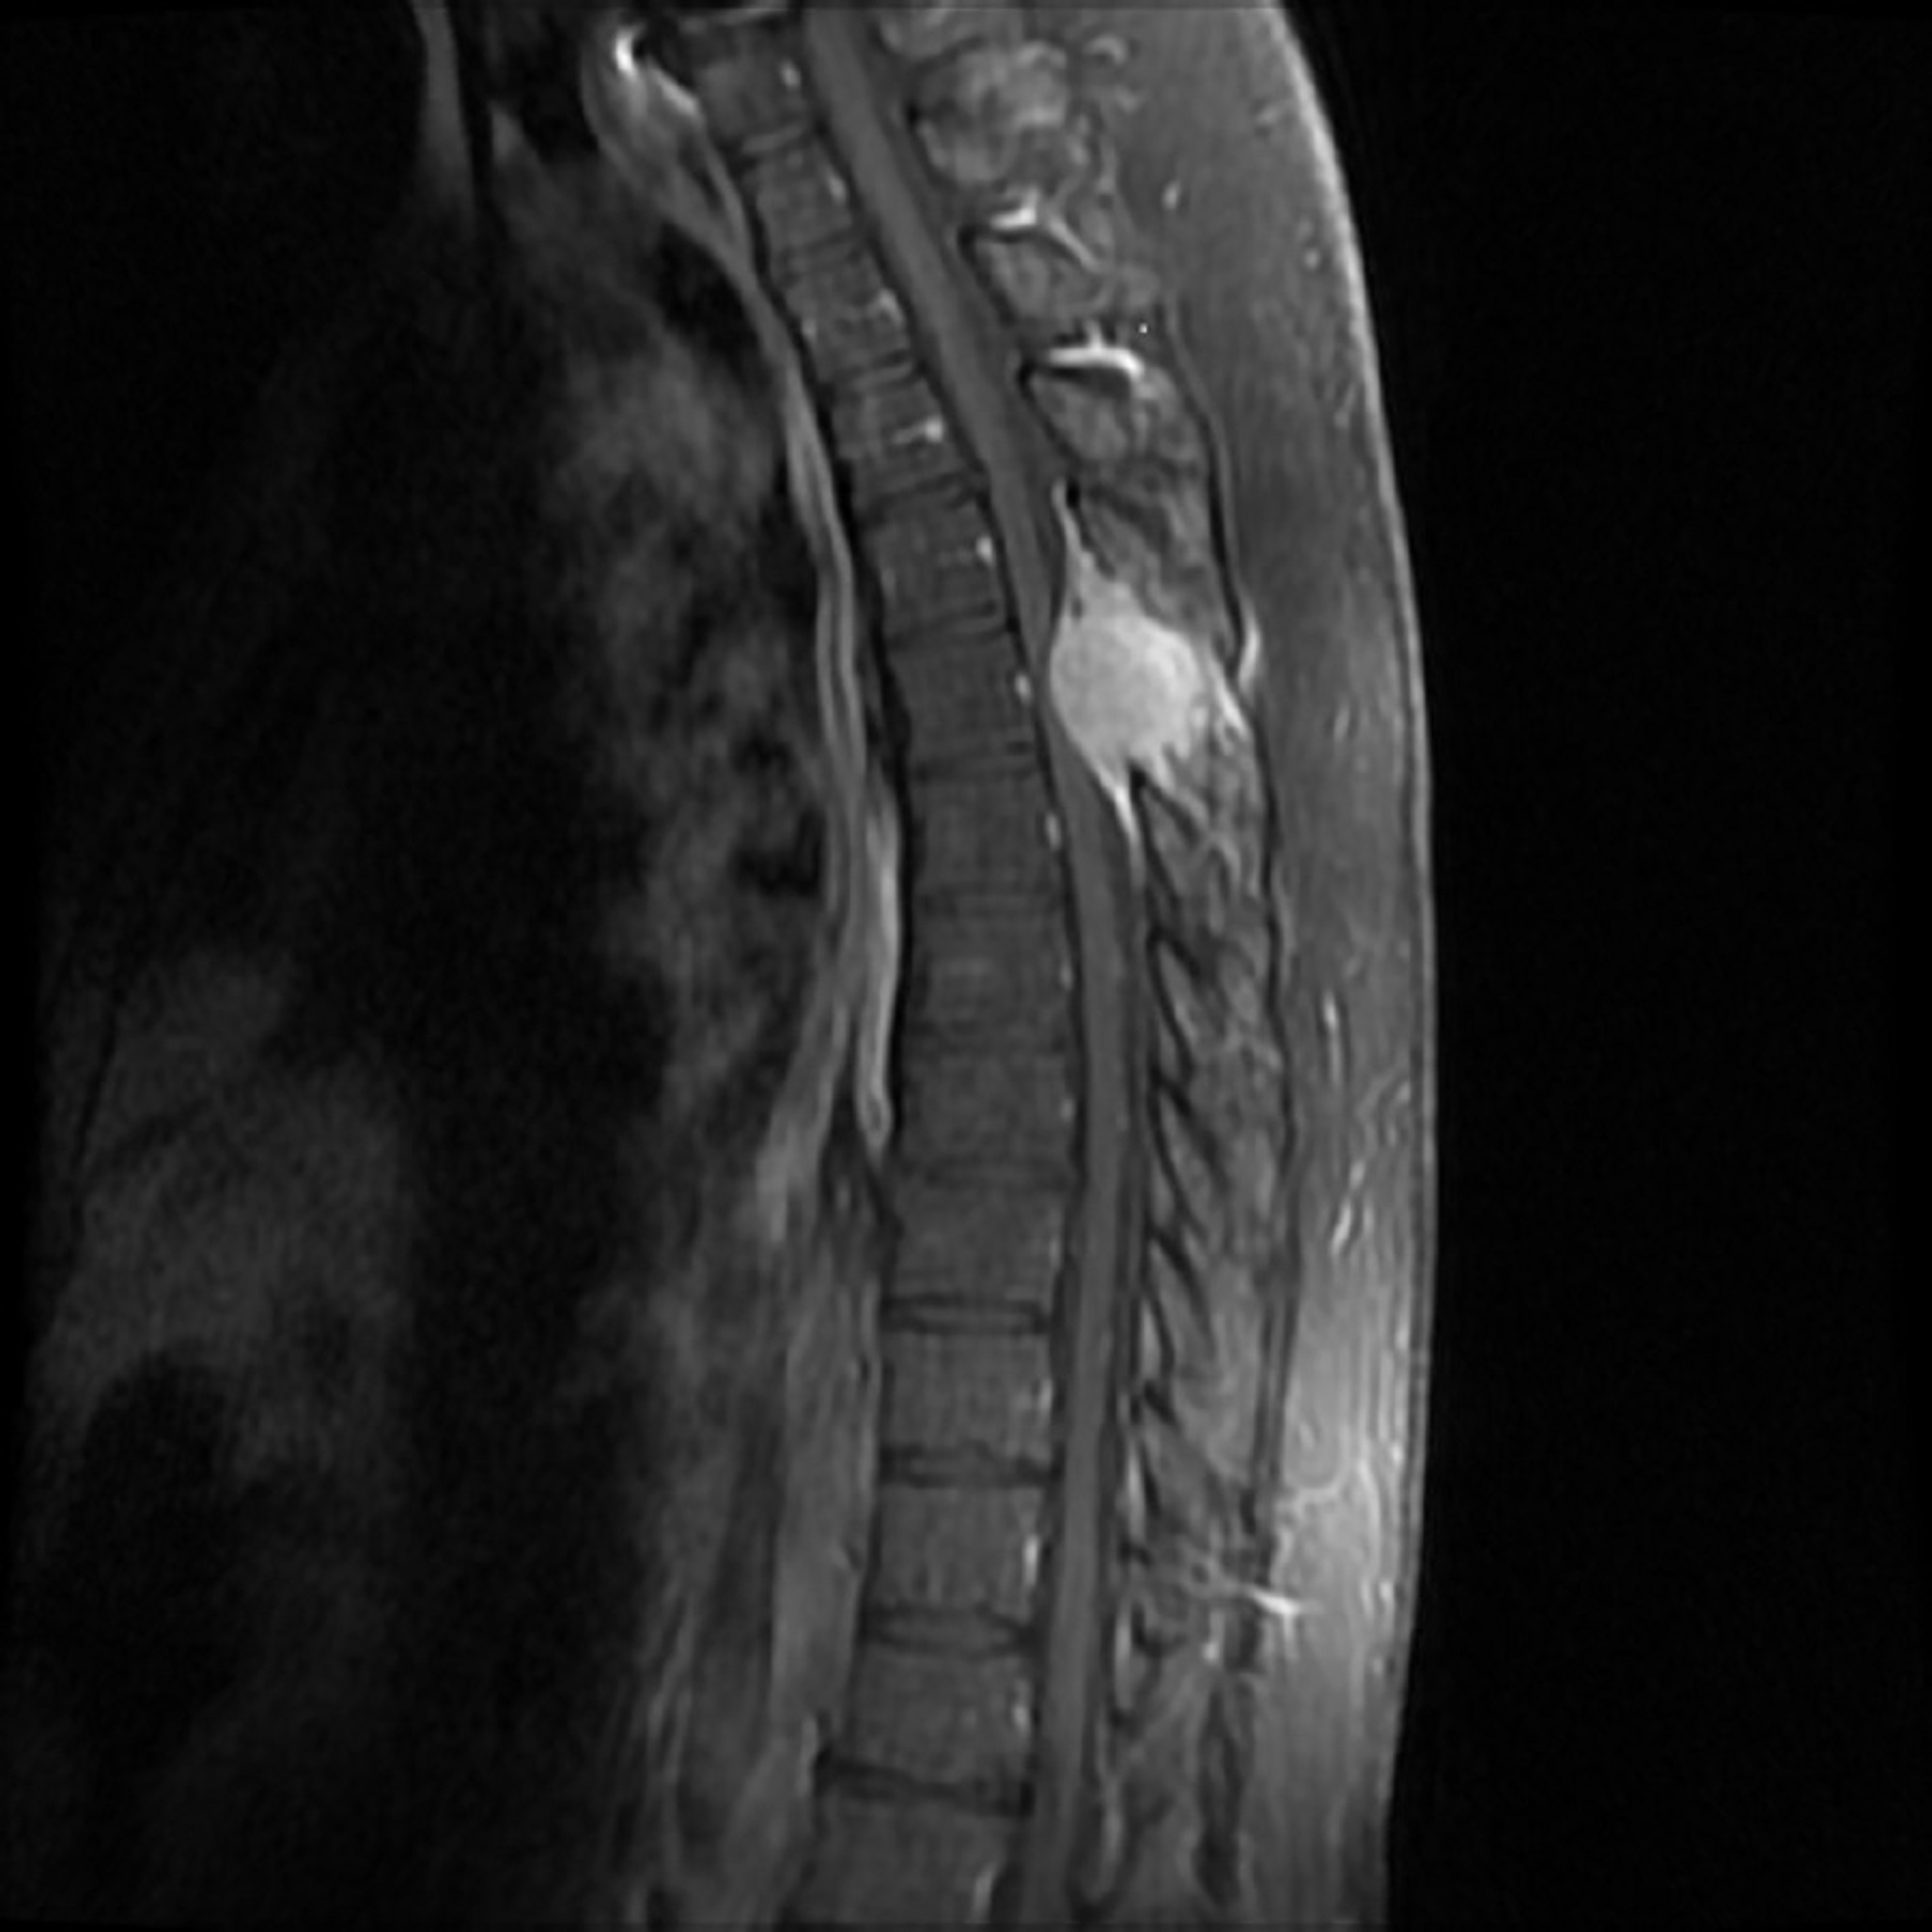 spinal cord compression